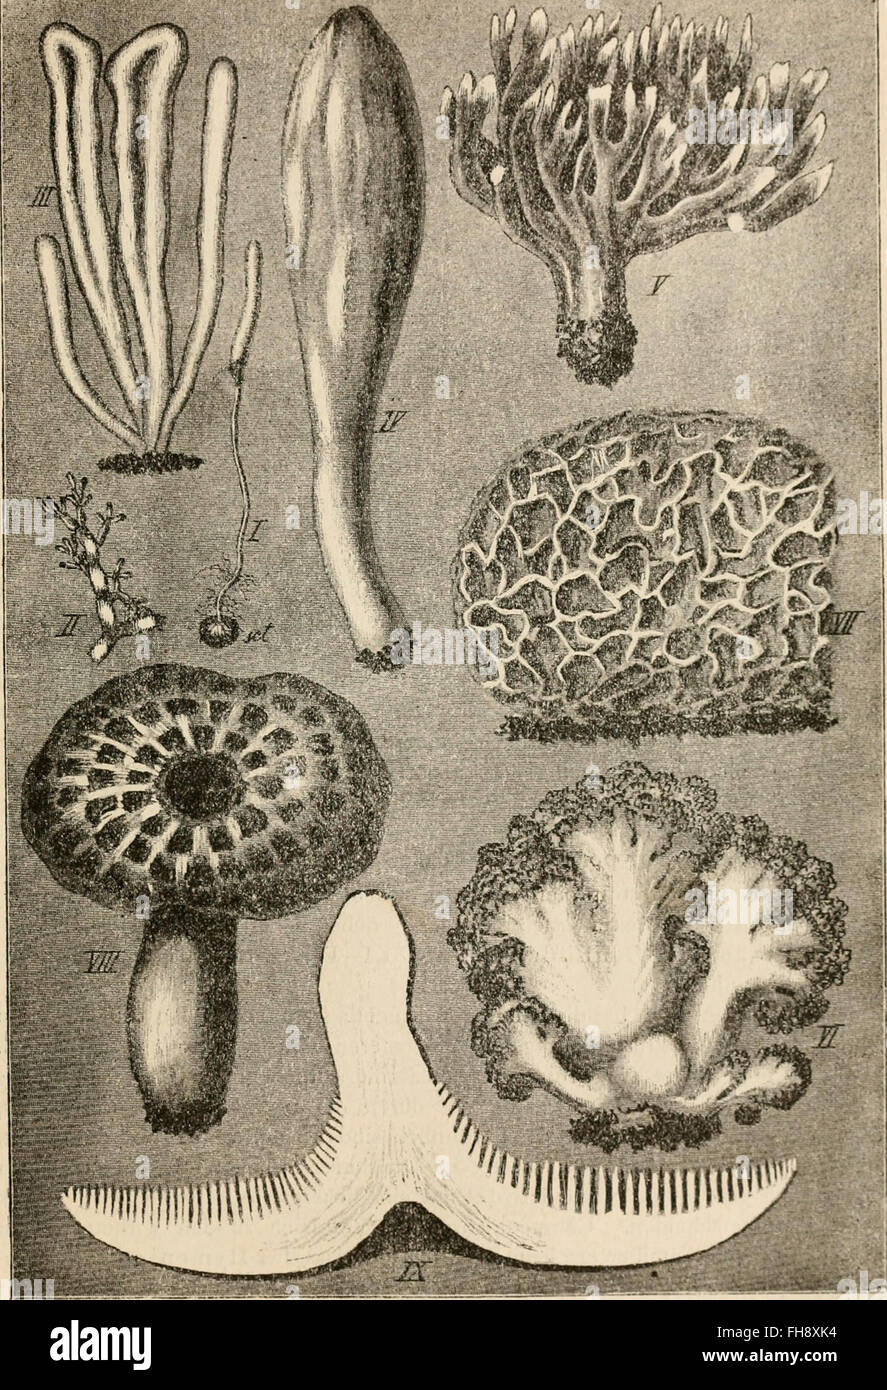 Die pilze dans morphologischer, physiologischer, biologischer und systematischer beziehung (1890) Banque D'Images